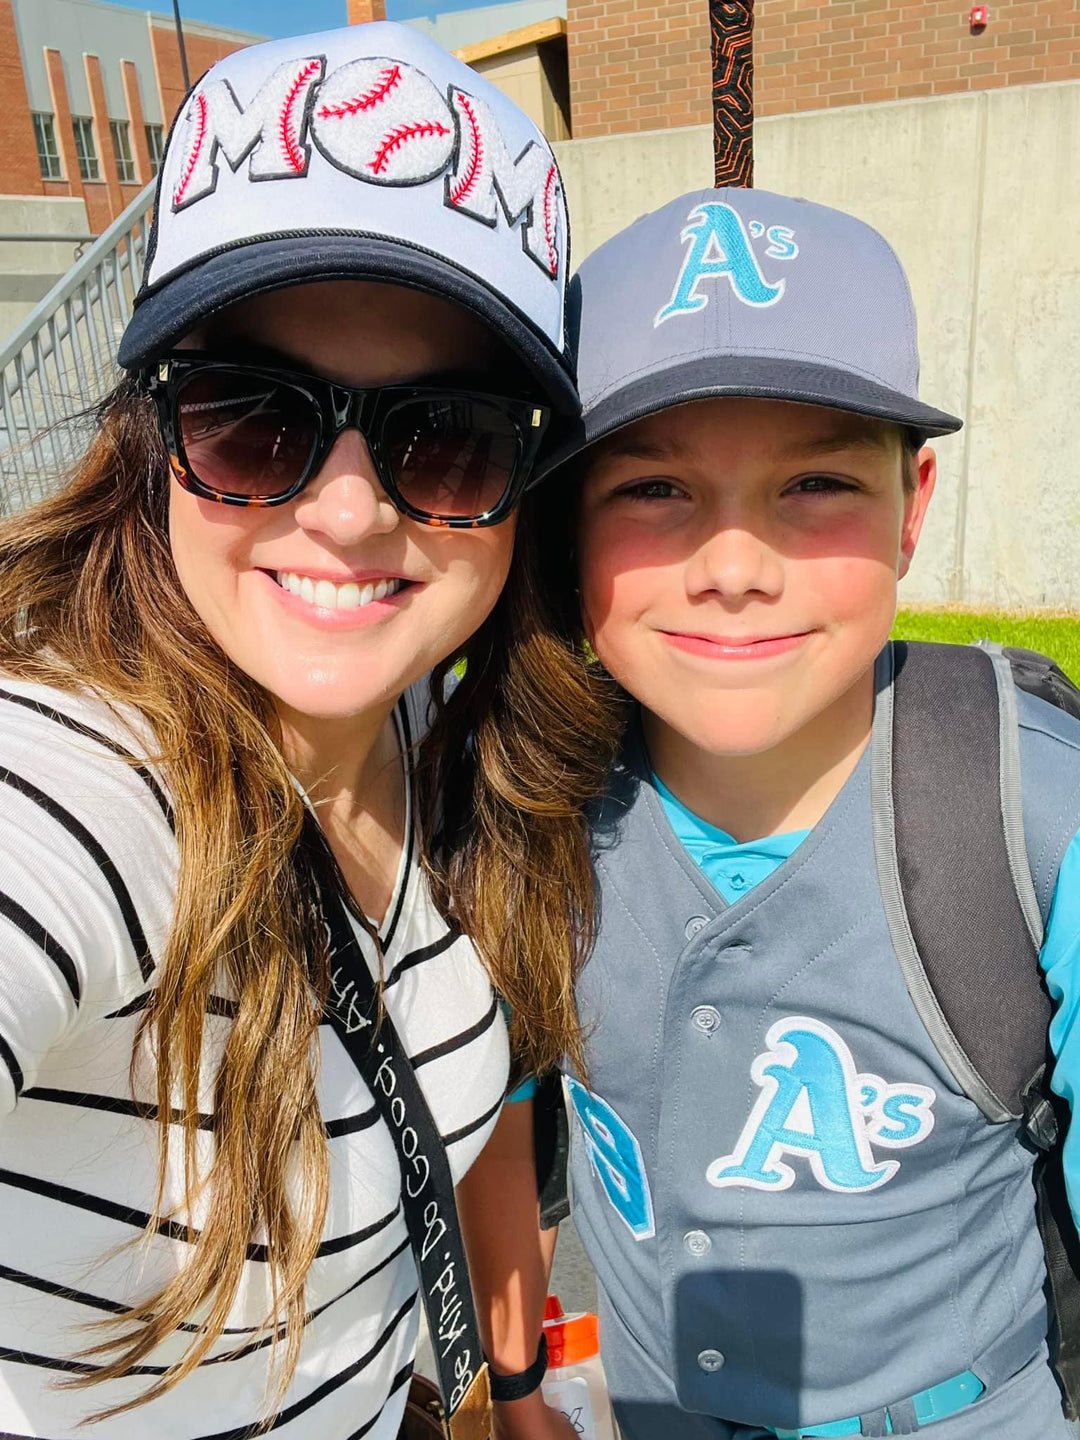 Mom Sherpa Patch Trucker Hat: Baseball & Softball